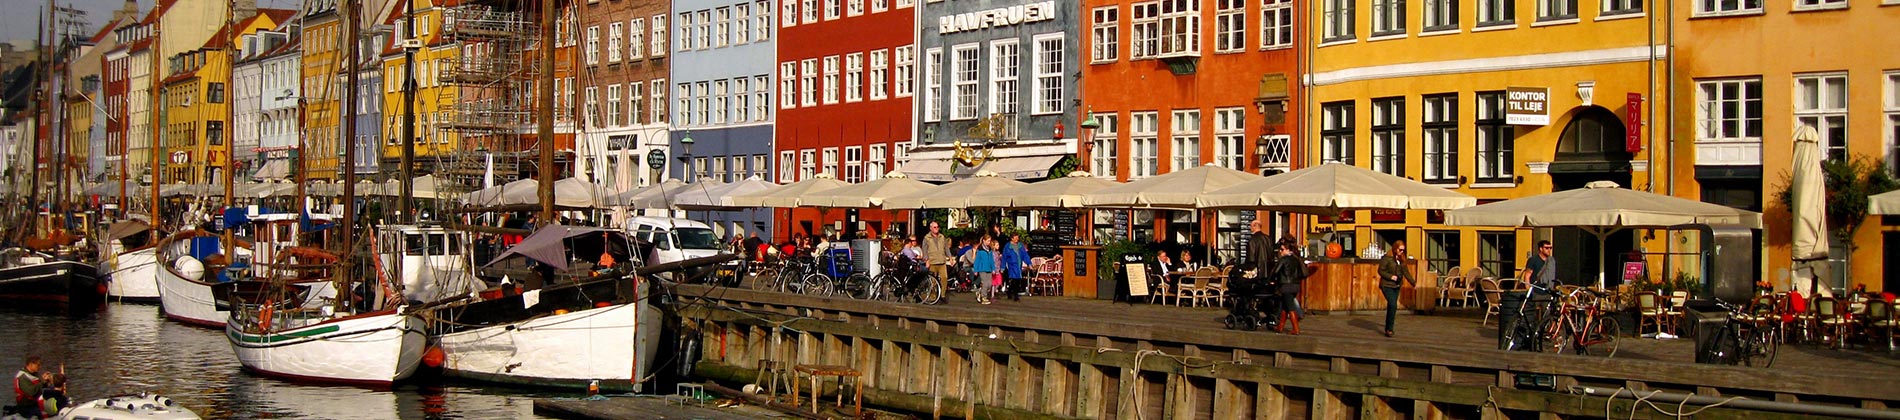 Ti billige ferier i Danmark